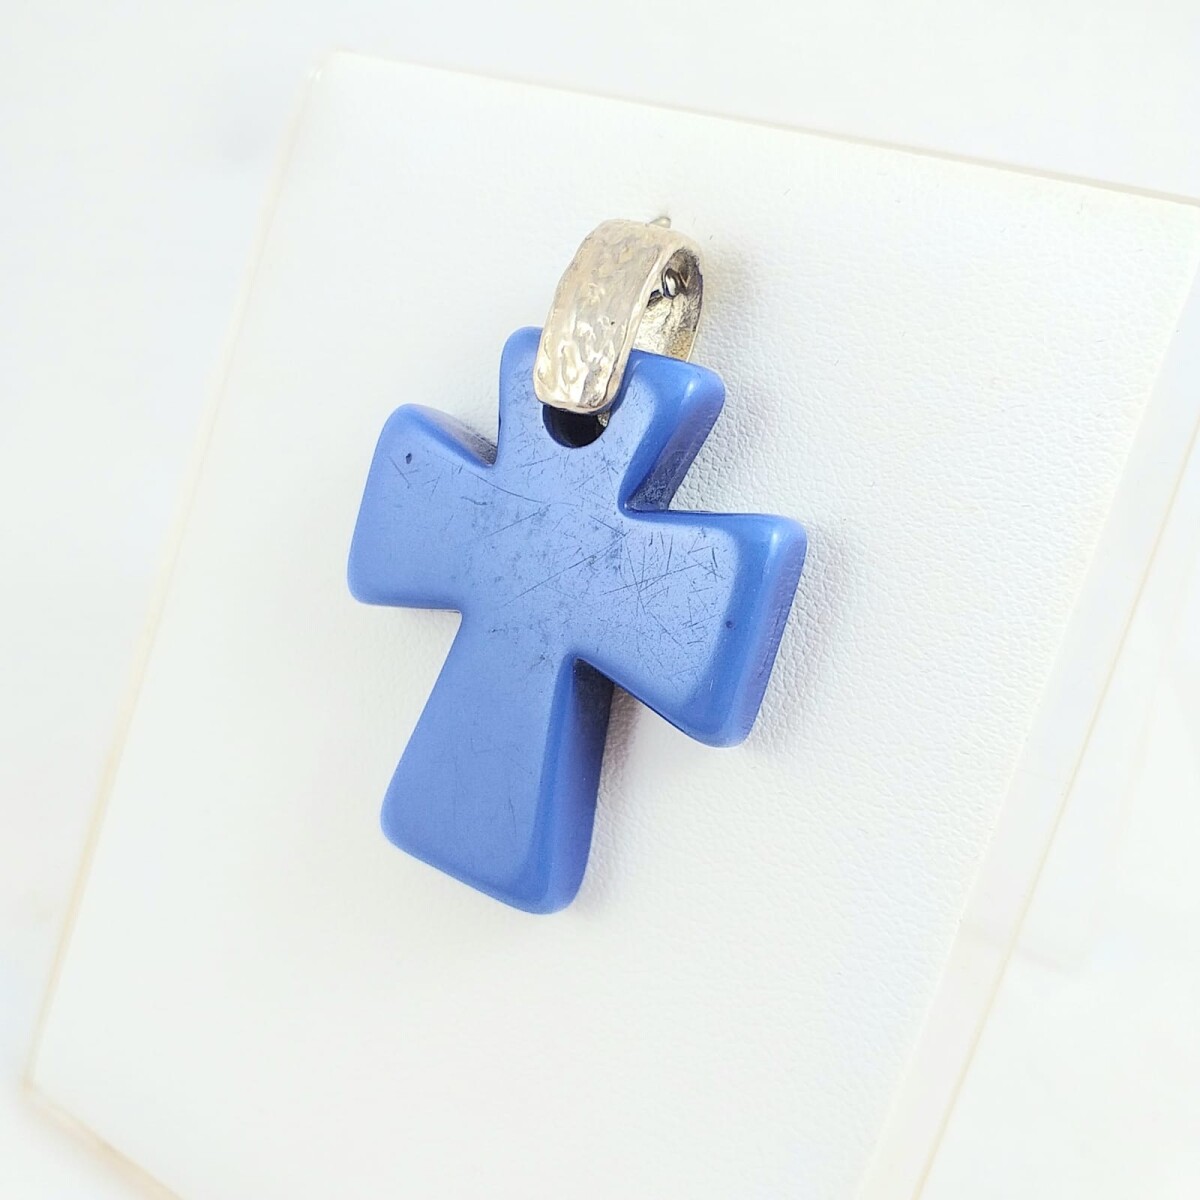 Cruz en resina lisa color azul, medidas 3.5cm*3cm, argolla en plata 925. 